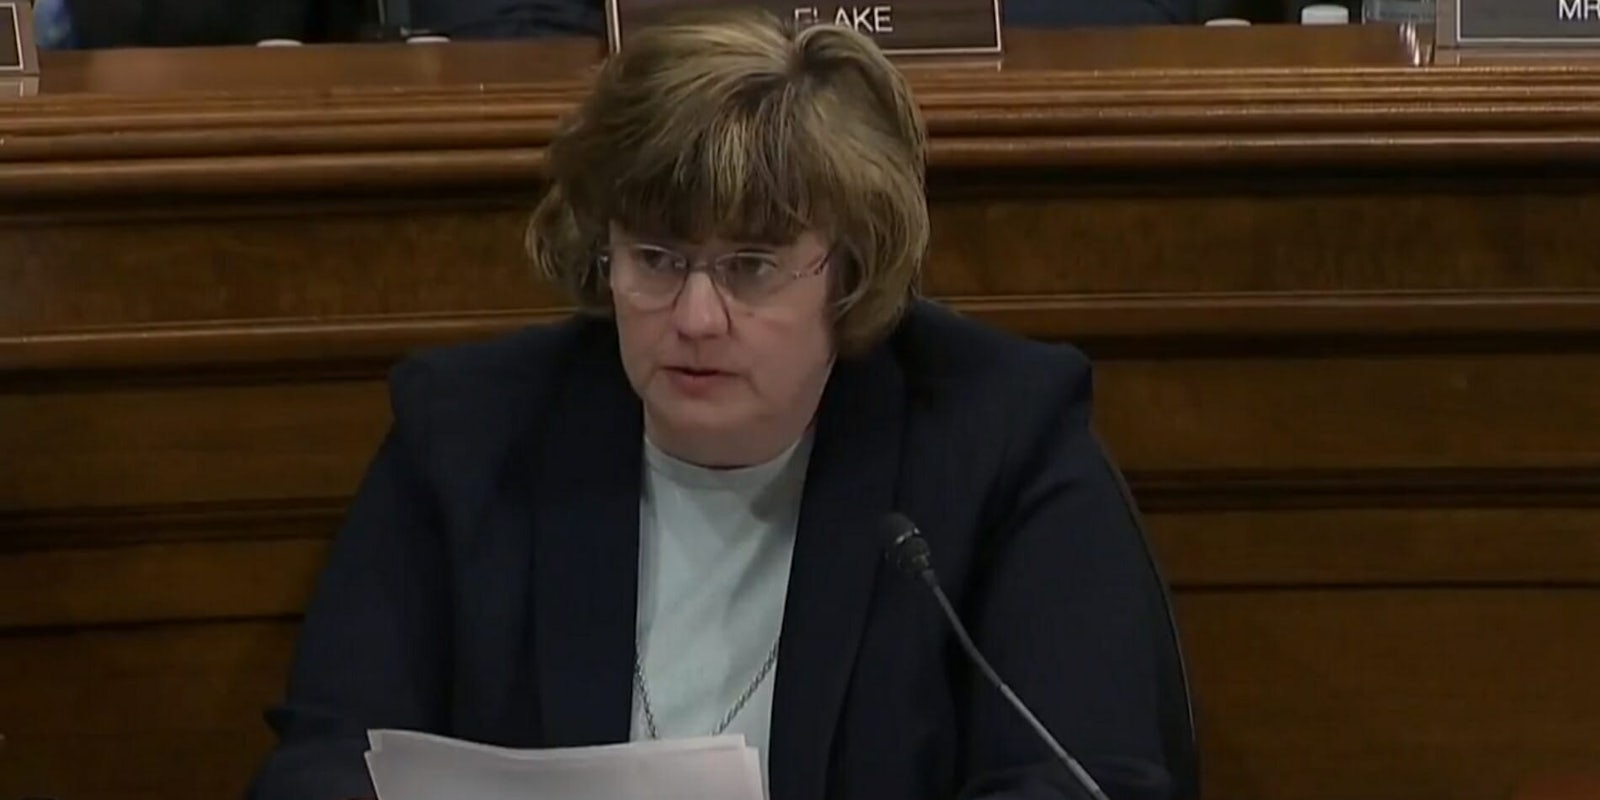 Rachel Mitchell is under intense scrutiny for criticizing Dr. Christine Blasey Ford's testimony.